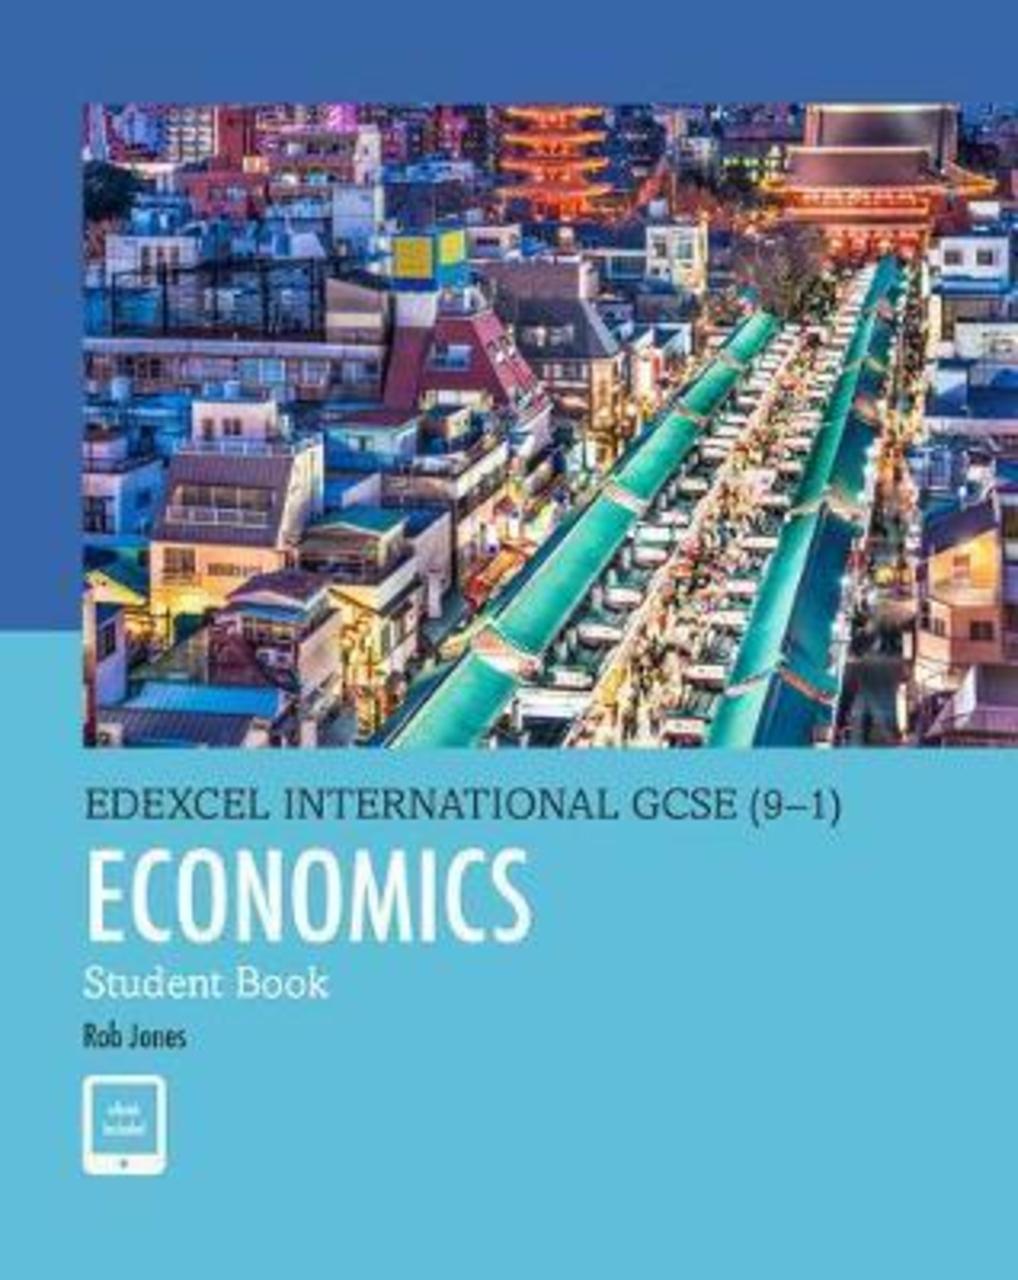 Sách - Pearson Edexcel International GCSE (9-1) Economics Student Book by Rob Jones (UK edition, paperback)